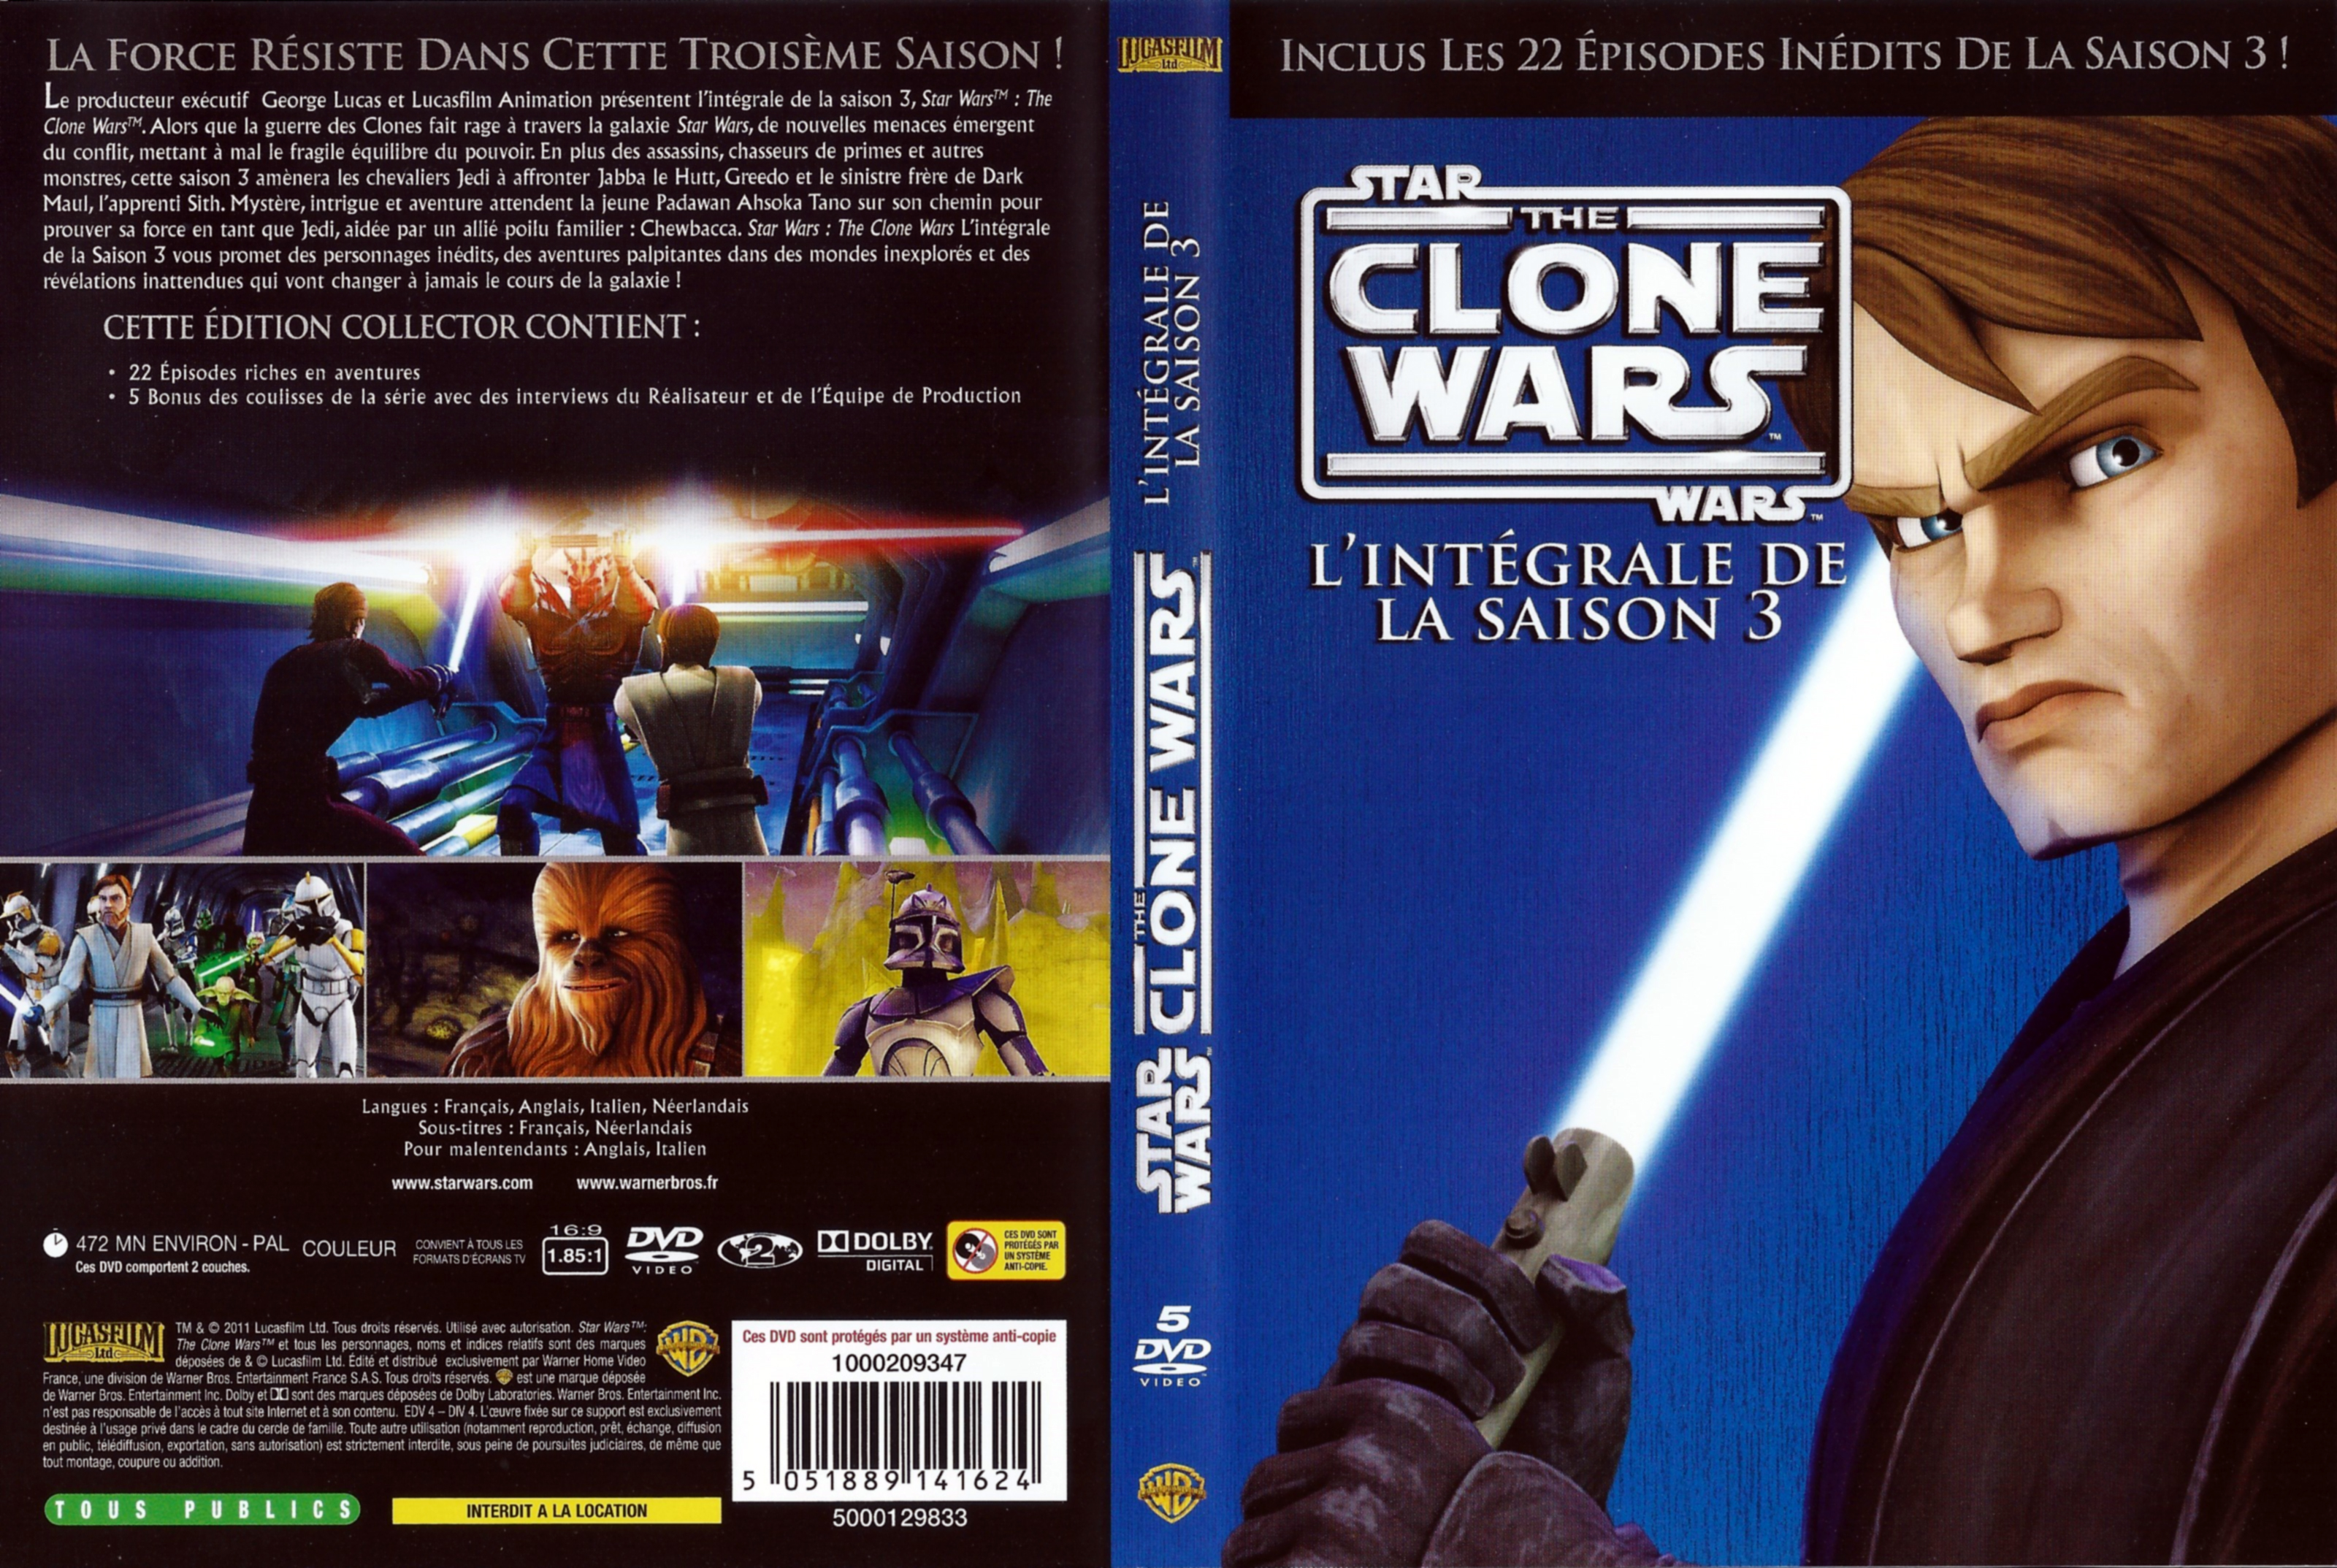 Jaquette DVD Star Wars The Clone Wars Saison 3